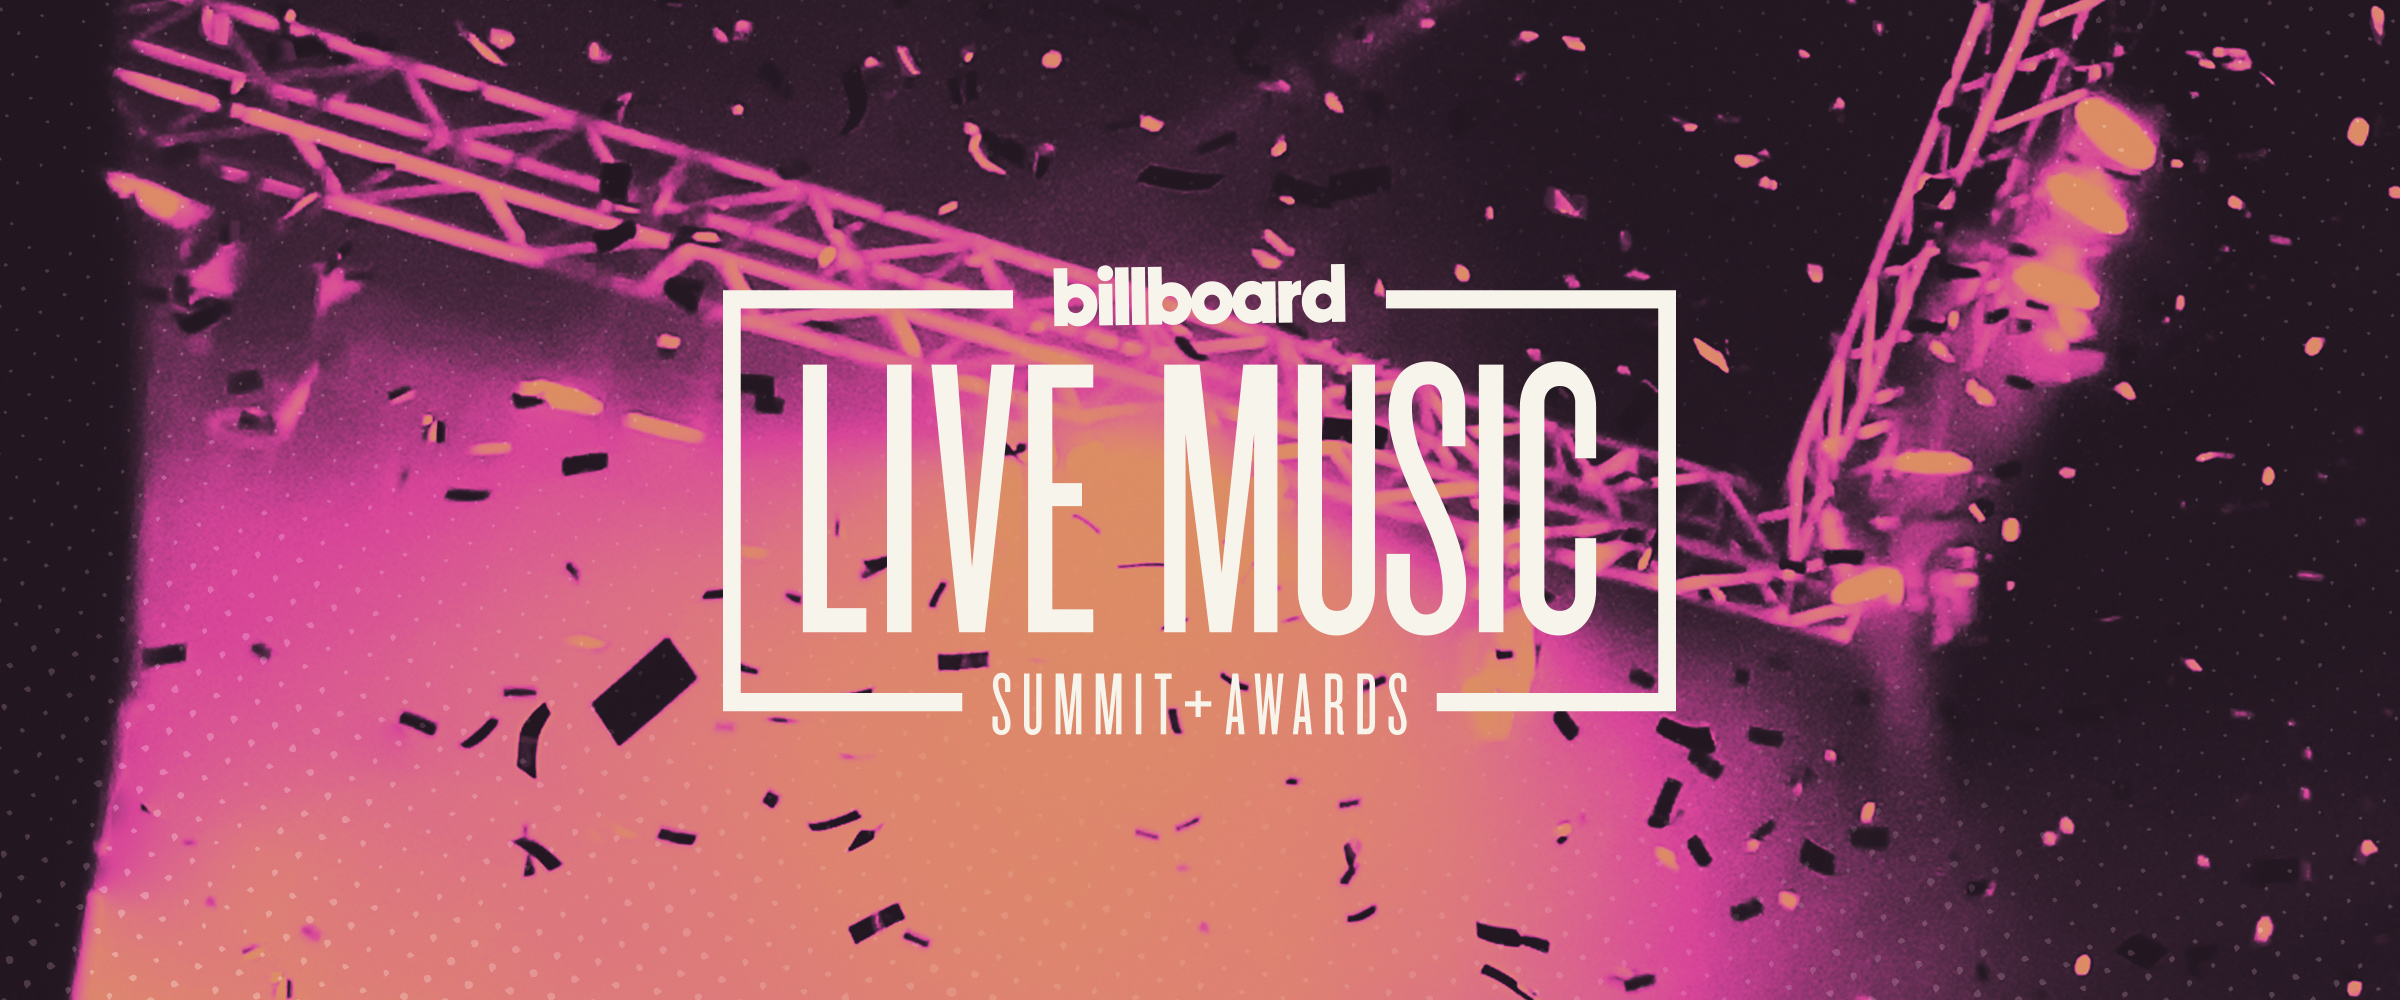 2018 Billboard Live Music Summit & Awards